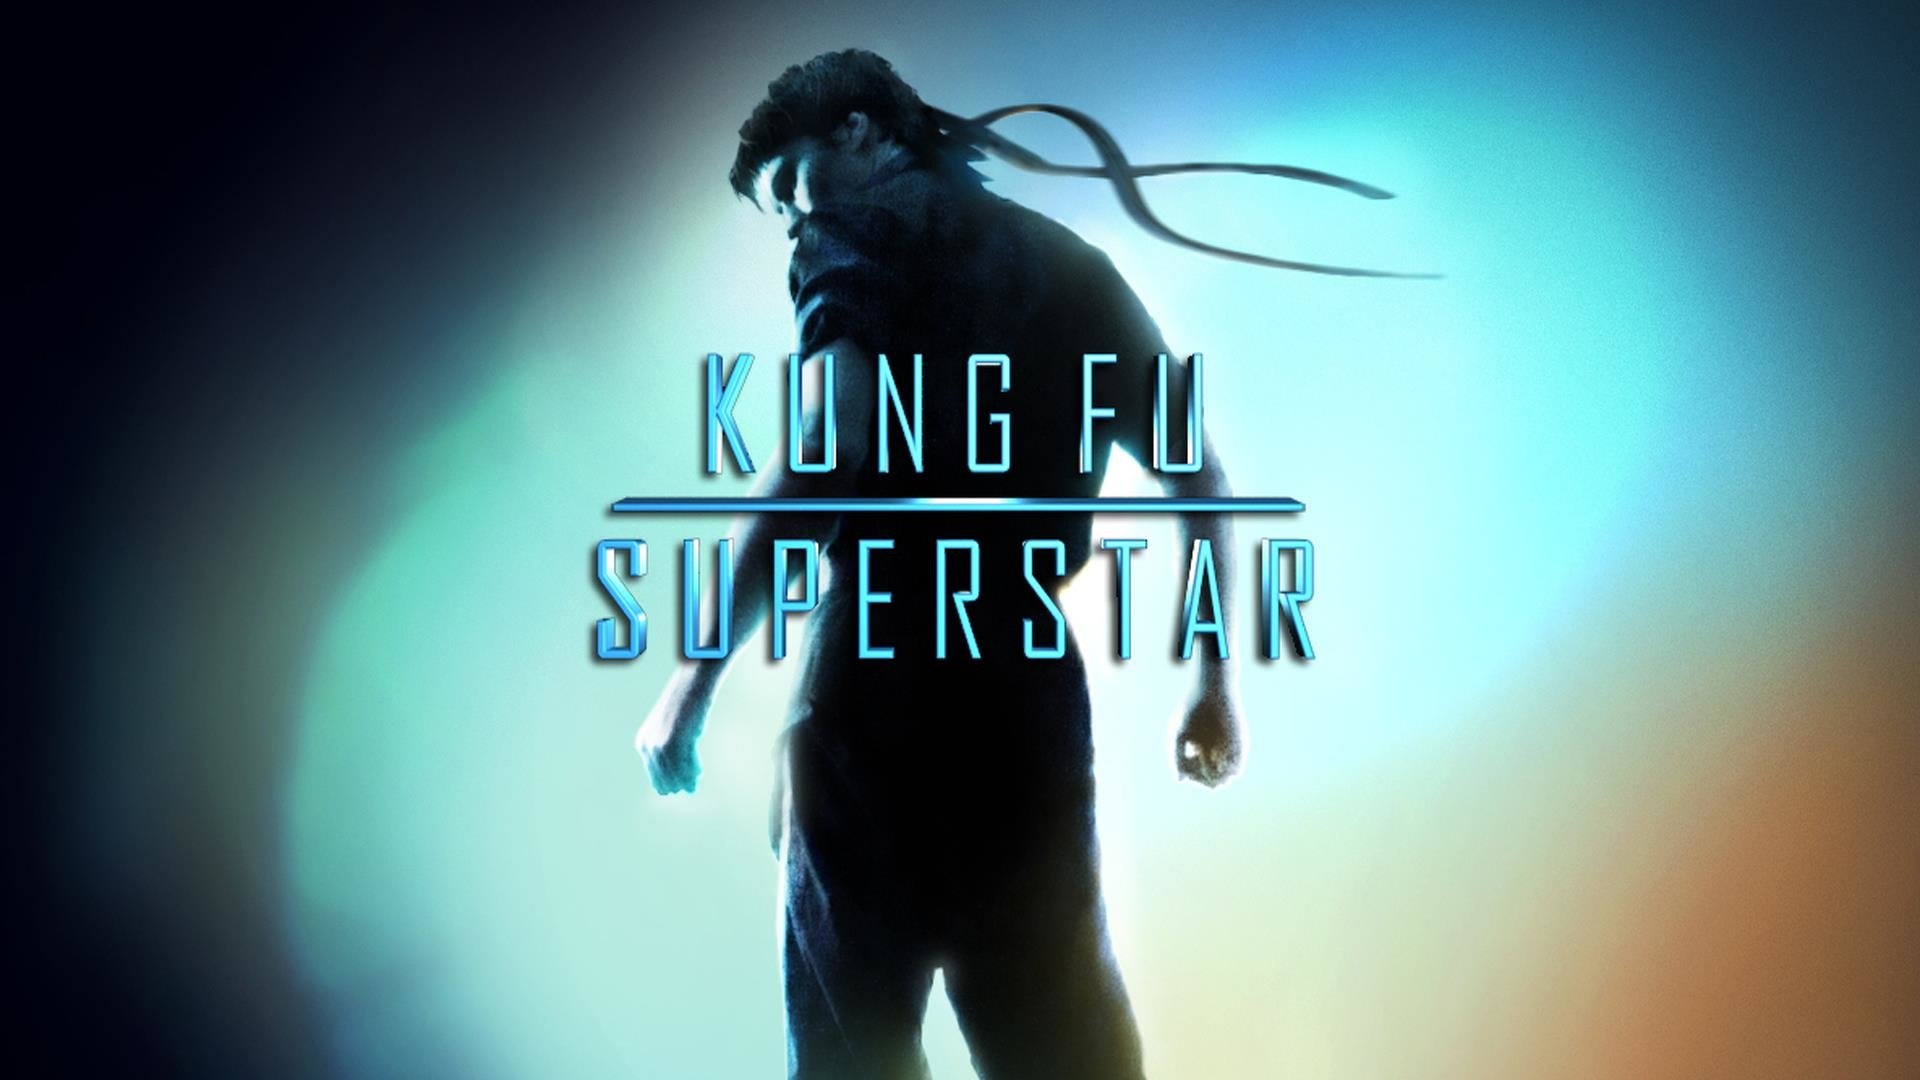 Kung Fu Superstar Puter Wallpaper Desktop Background